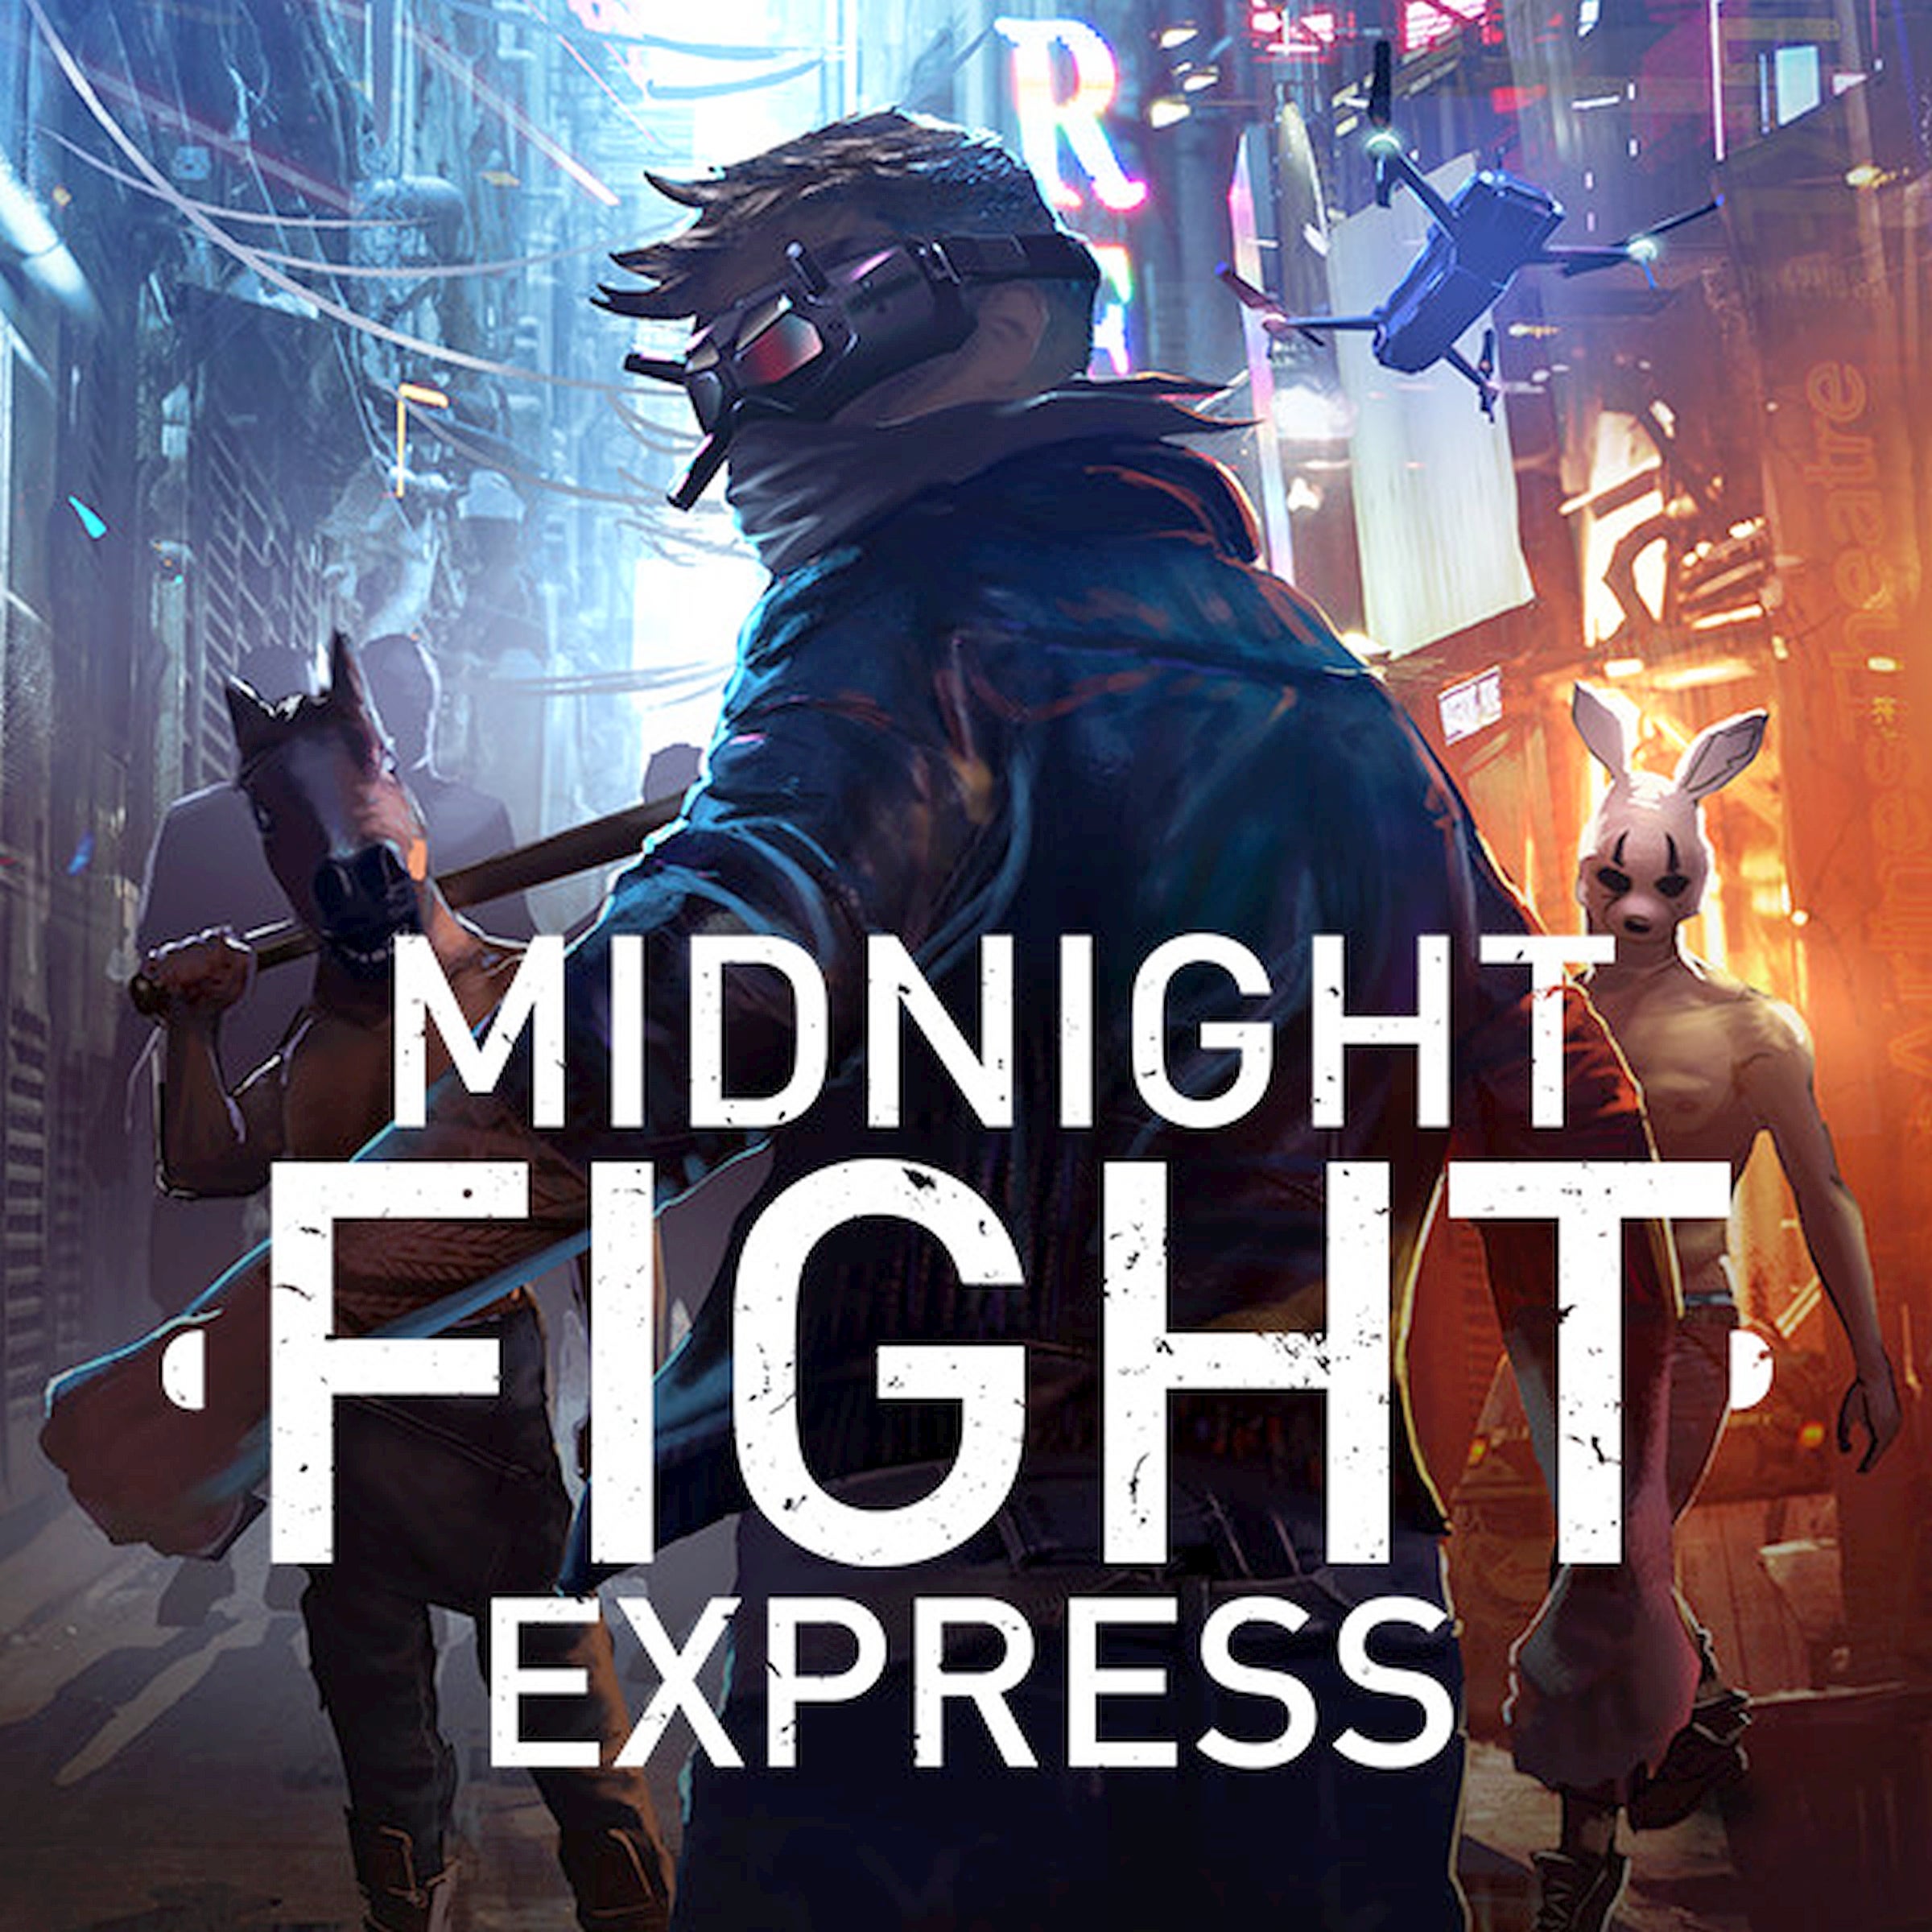 jaquette du jeu vidéo Midnight Fight Express